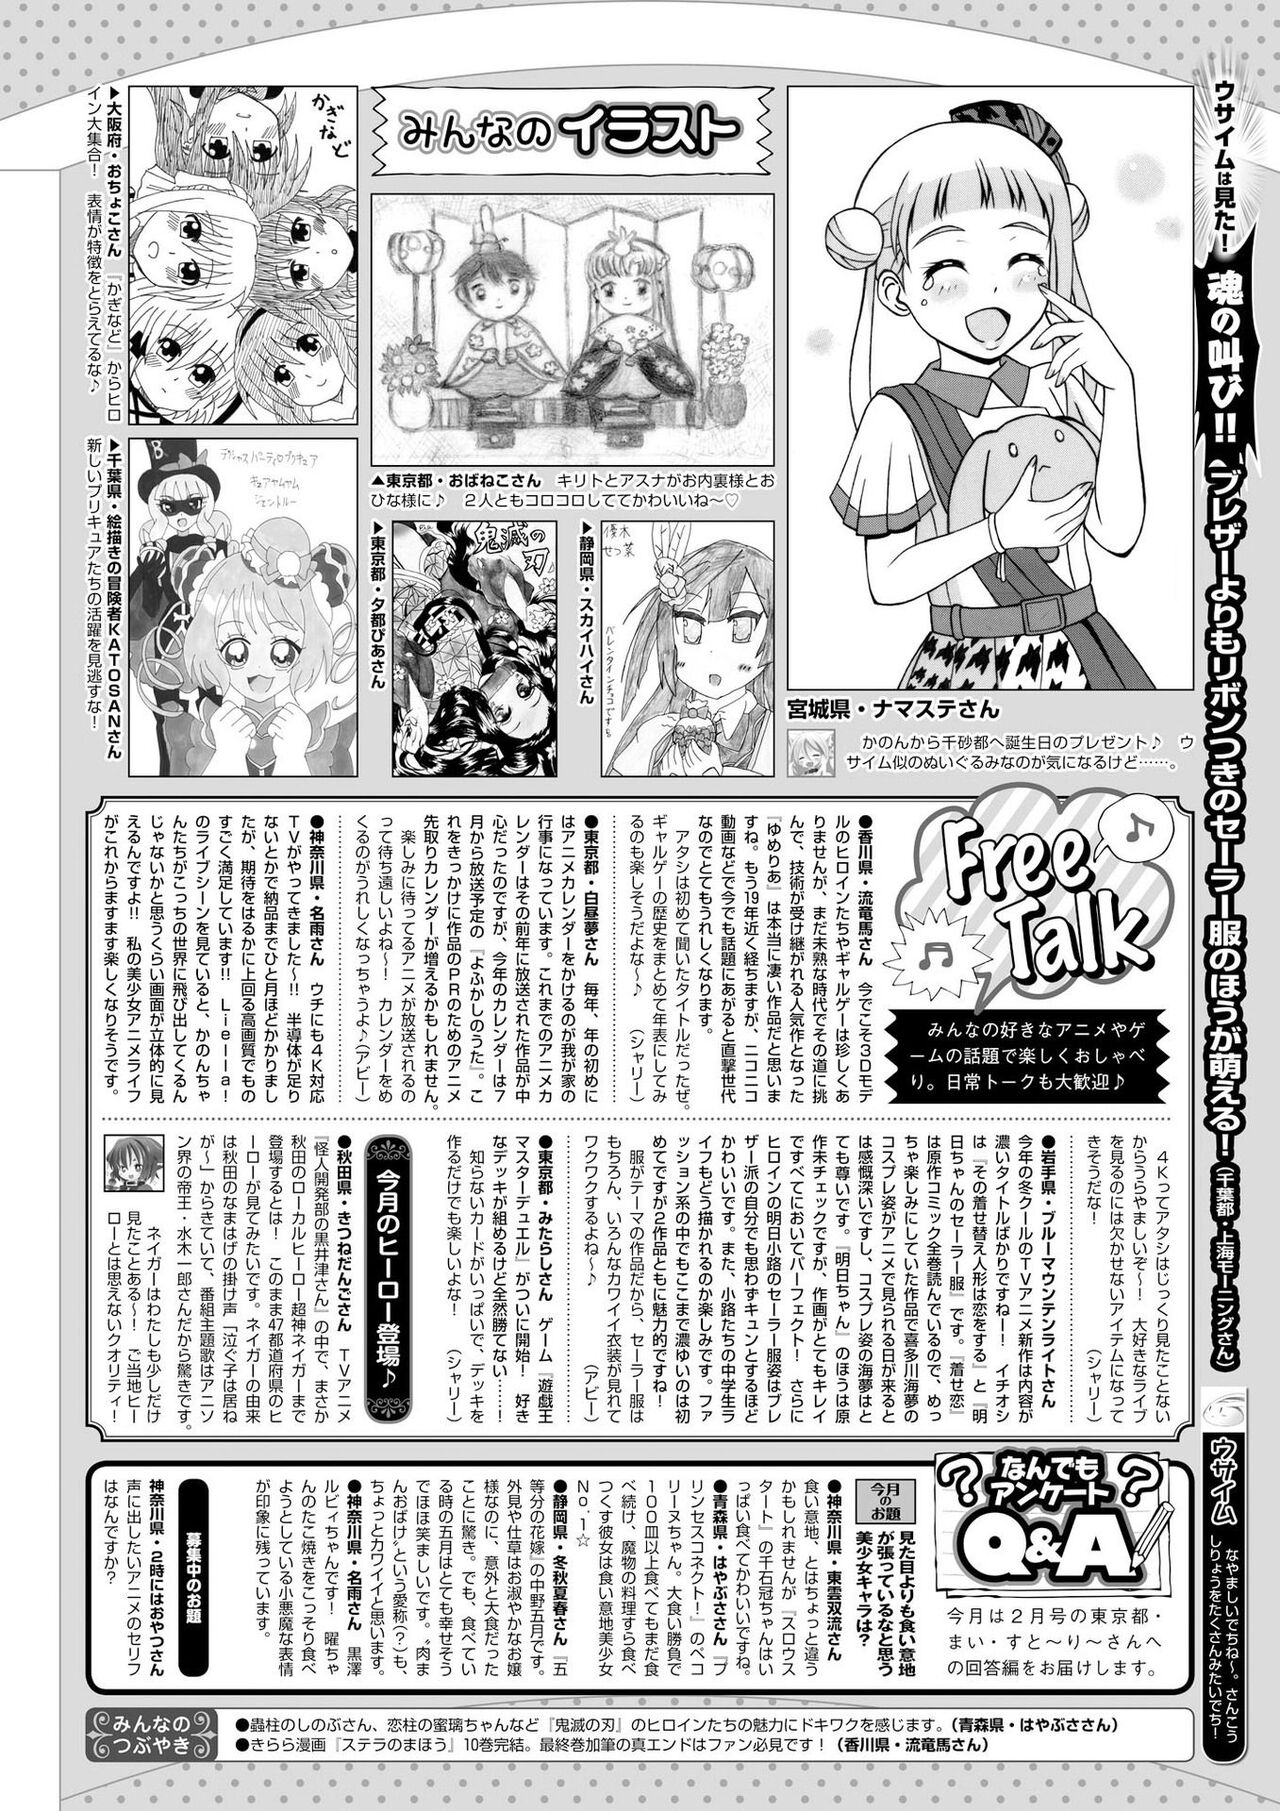 Dengeki G's Magazine #297 - April 2022 97